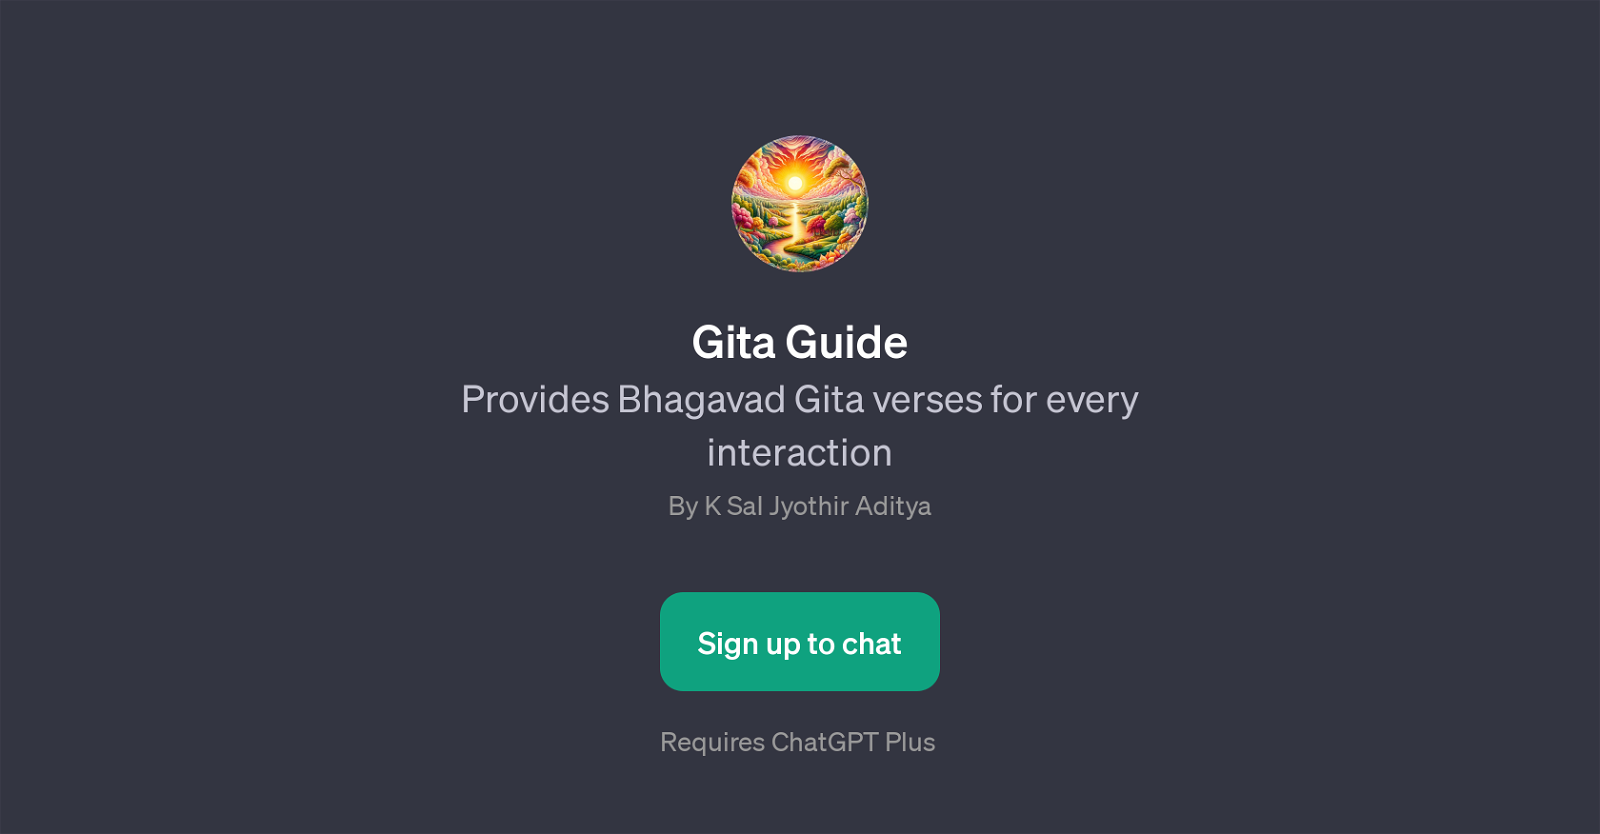 Gita Guide website